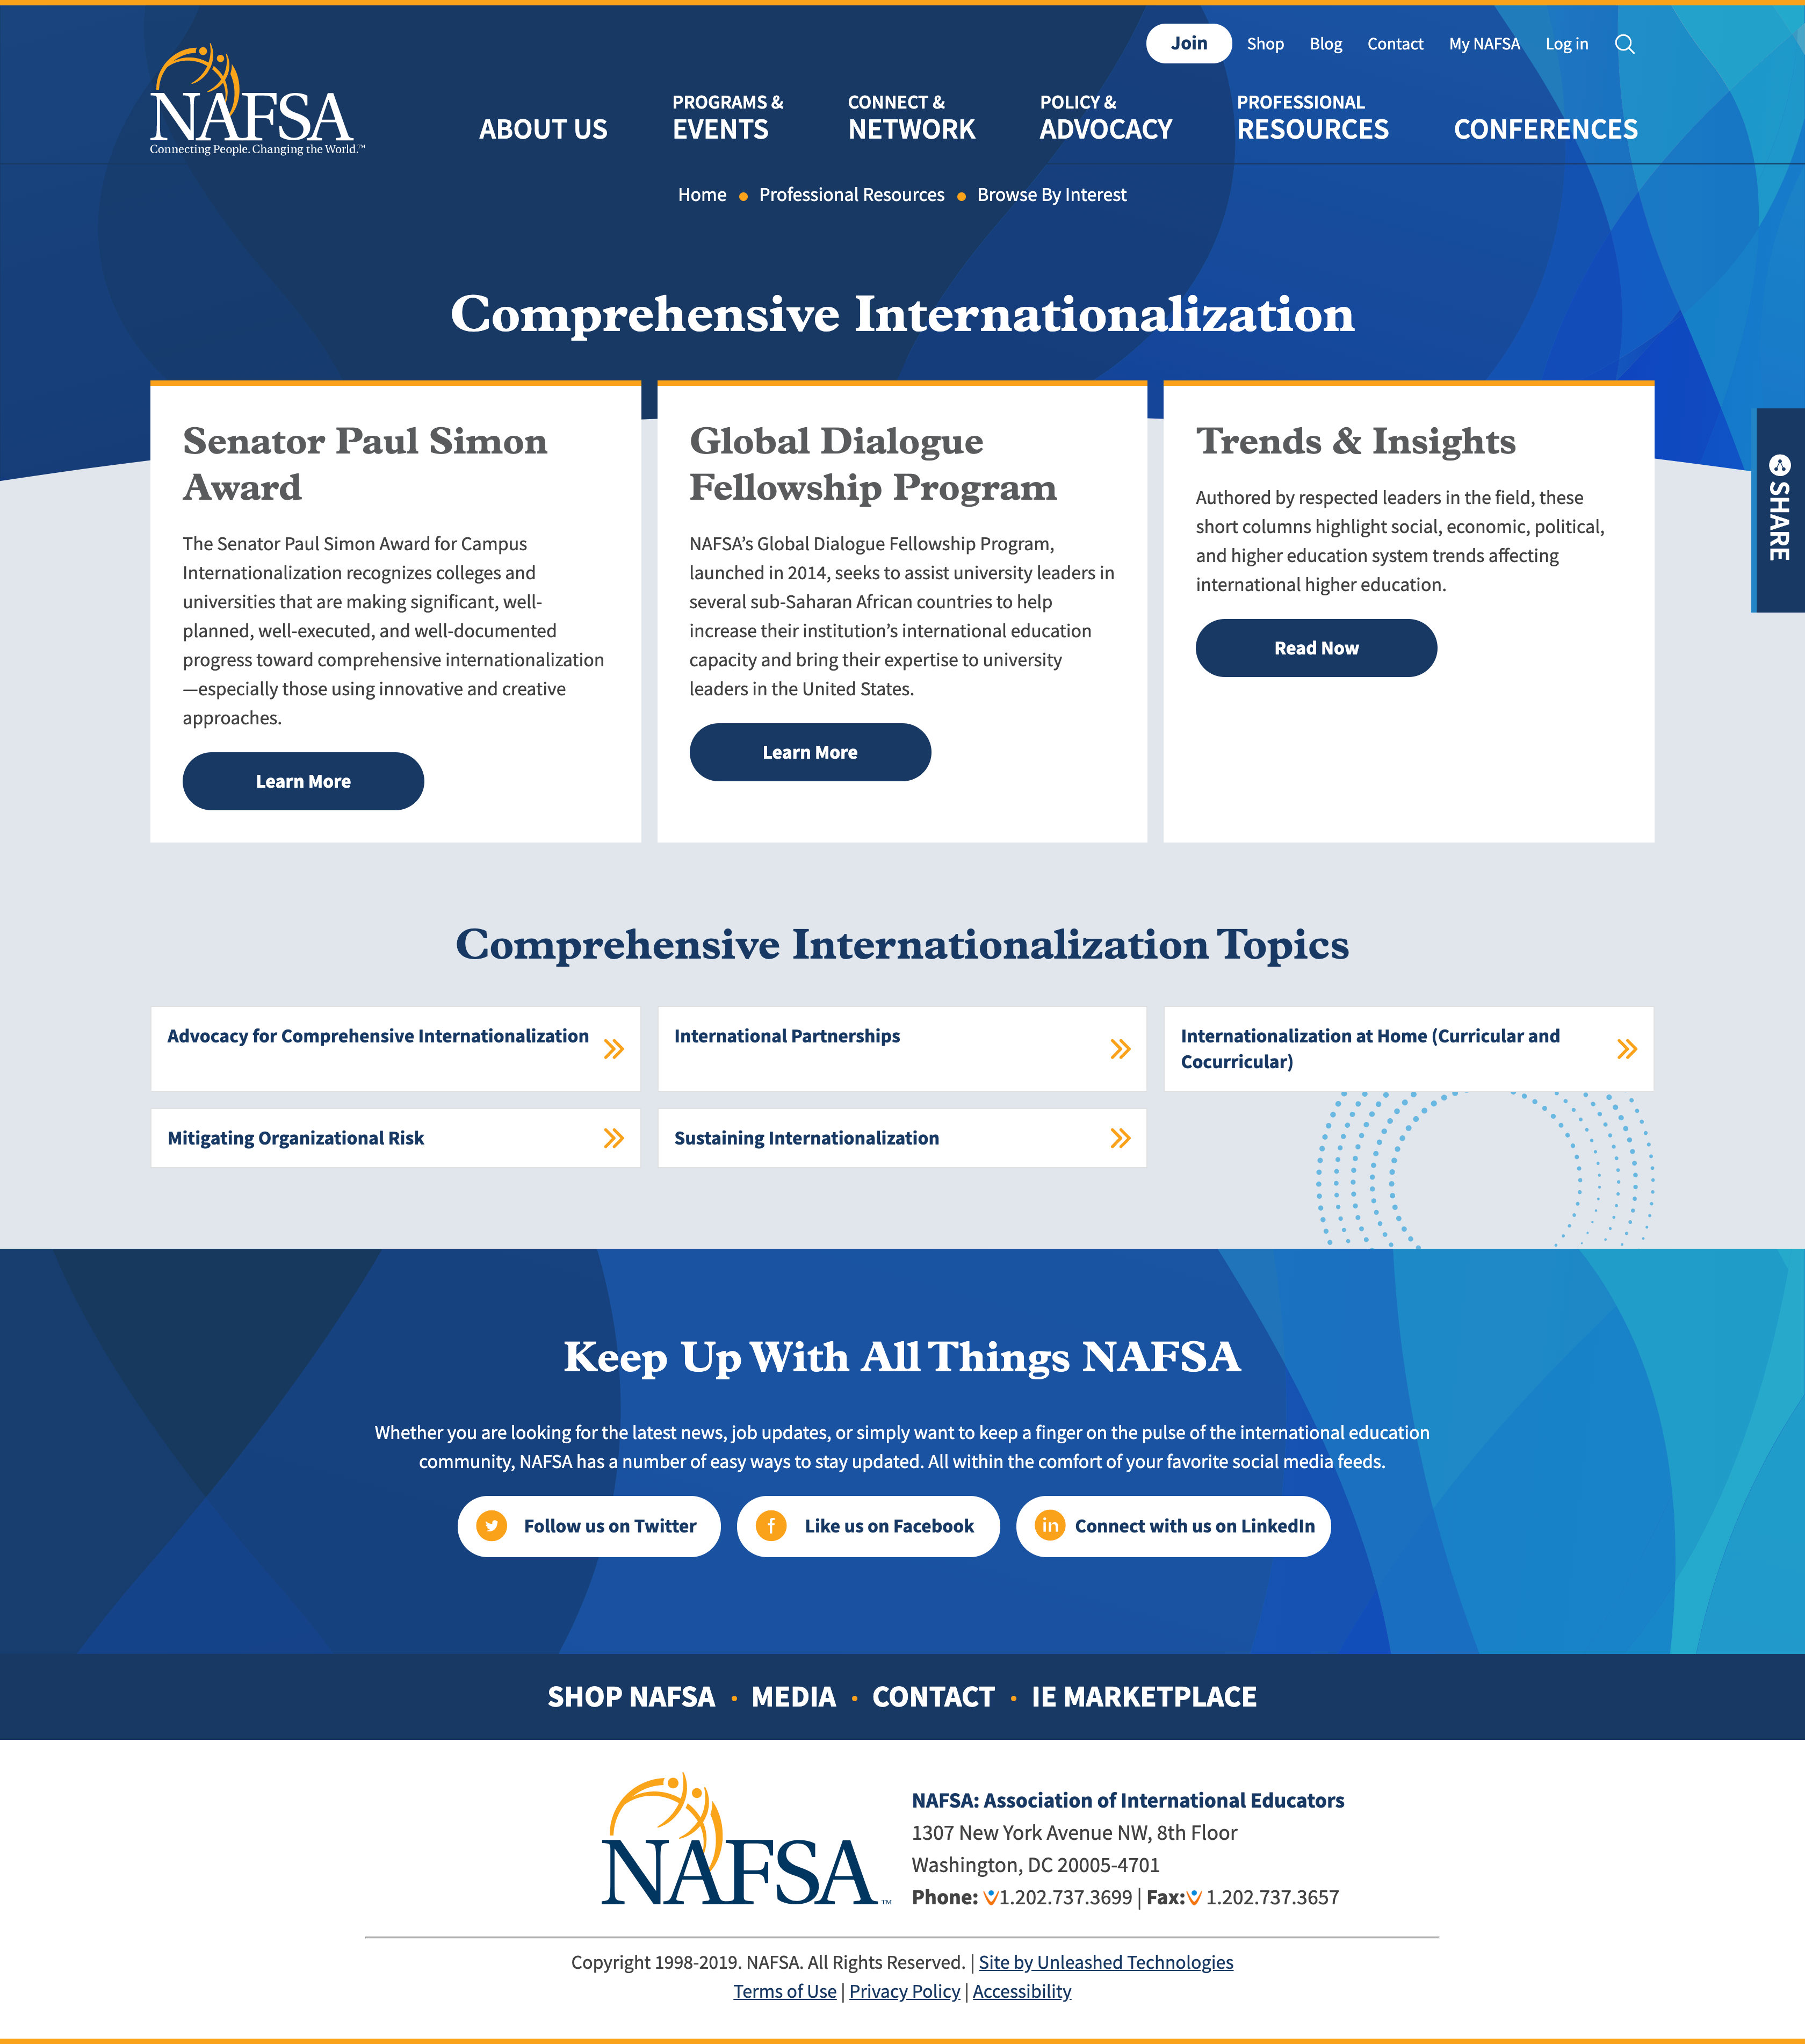 Vega Digital Awards Winner - NAFSA Digital Experience, Unleashed Technologies